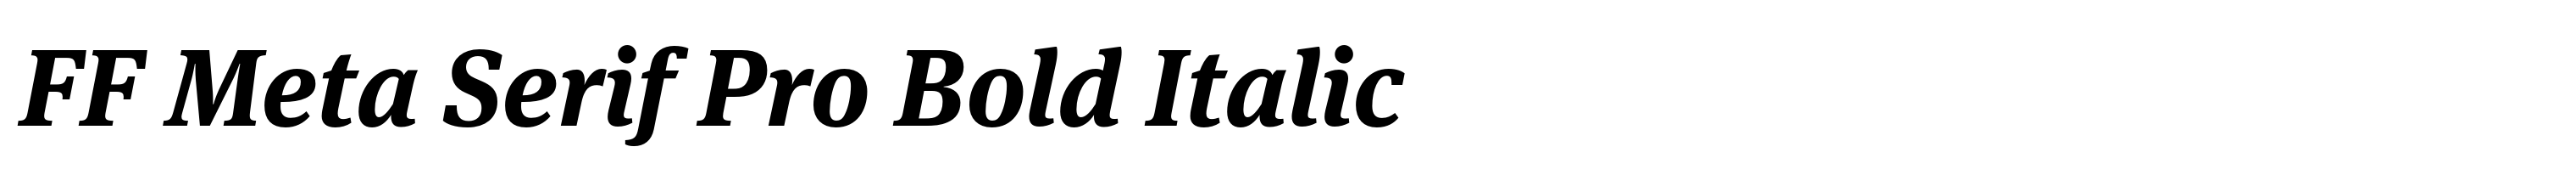 FF Meta Serif Pro Bold Italic